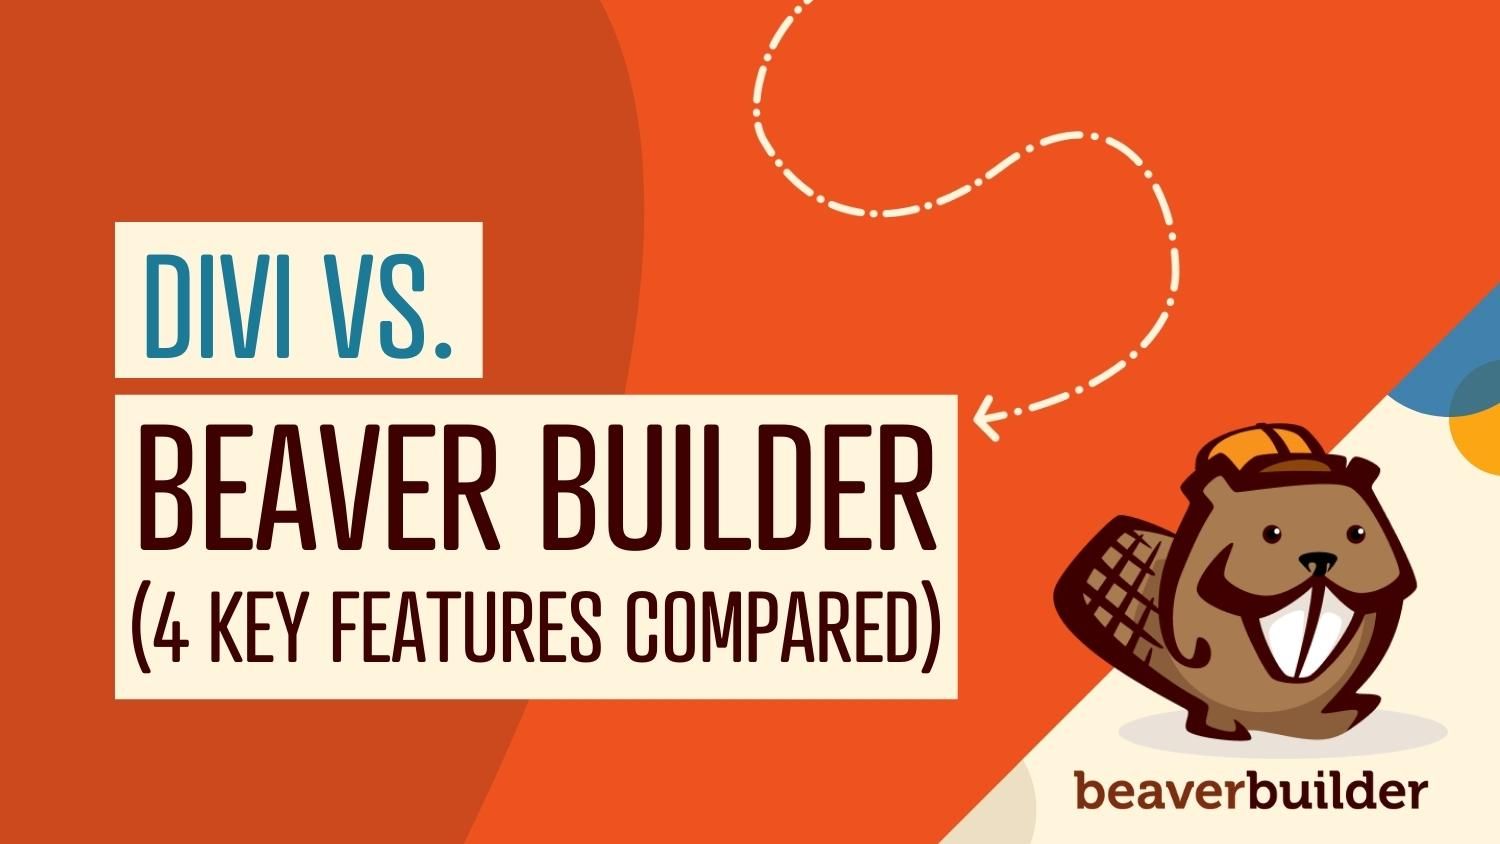 divi vs beaver builder 4 key features compared